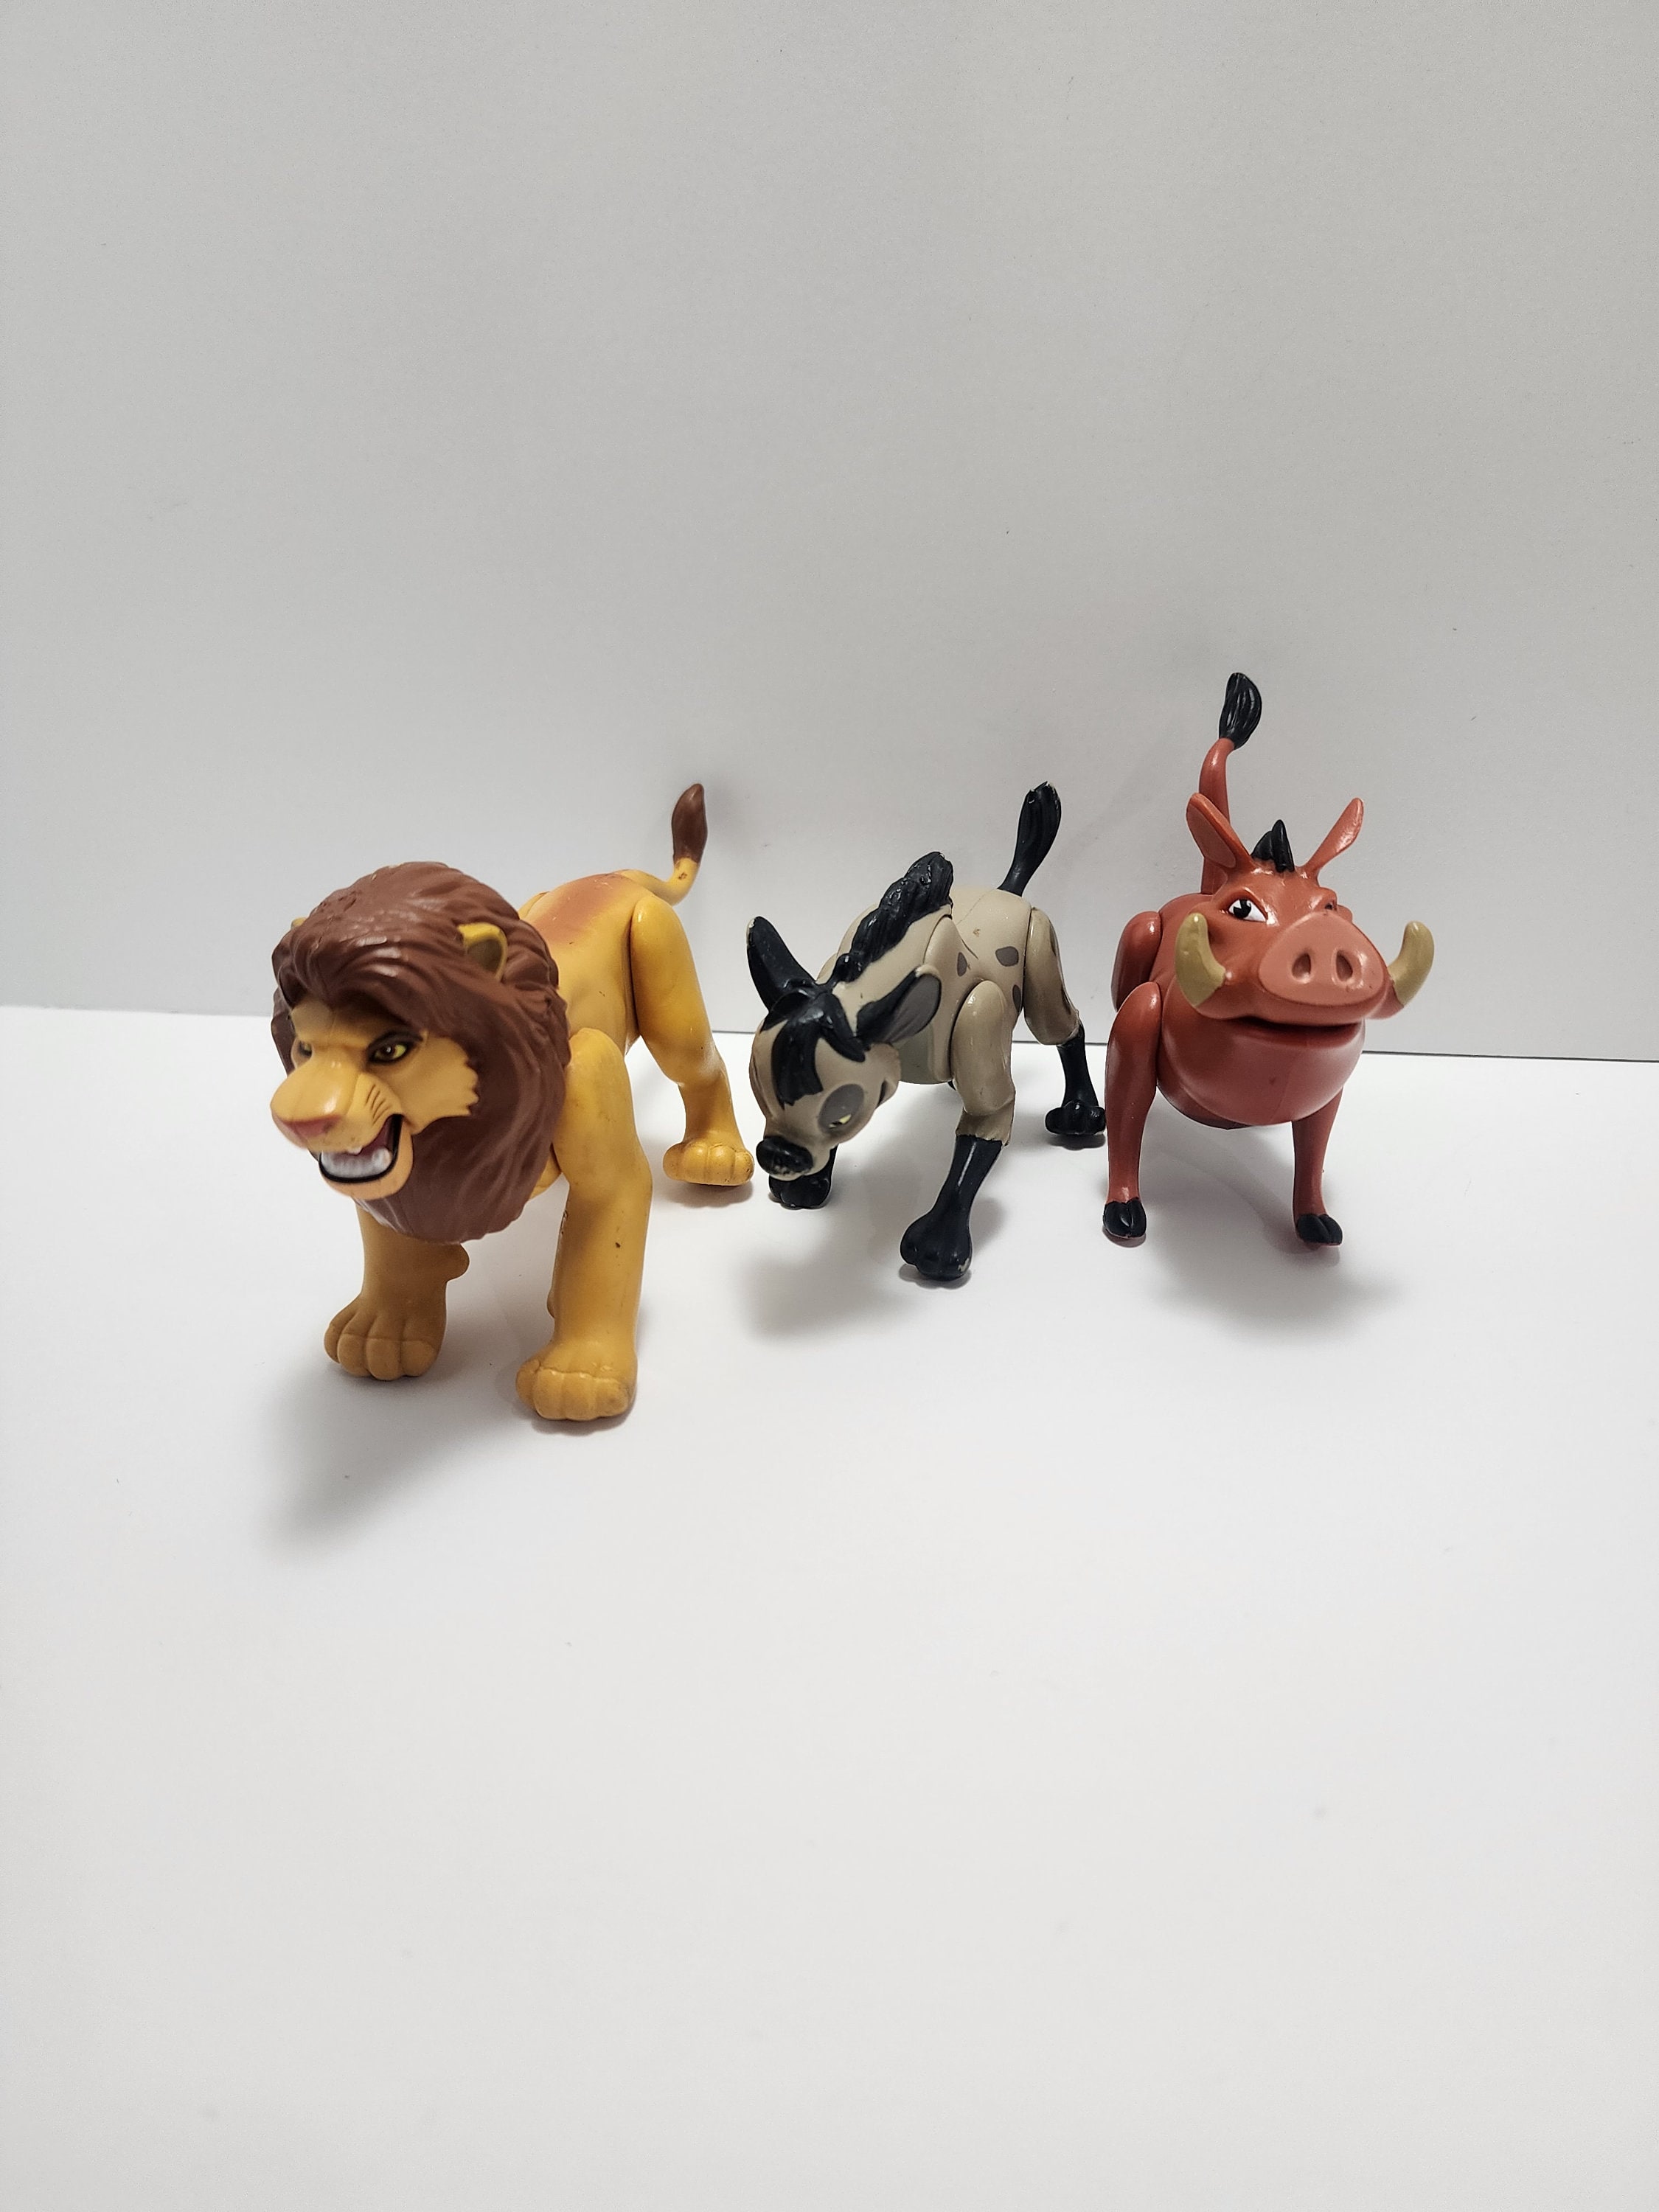 Disney Le Roi Lion - Figurine POP N° 496 - Simba — my little hero